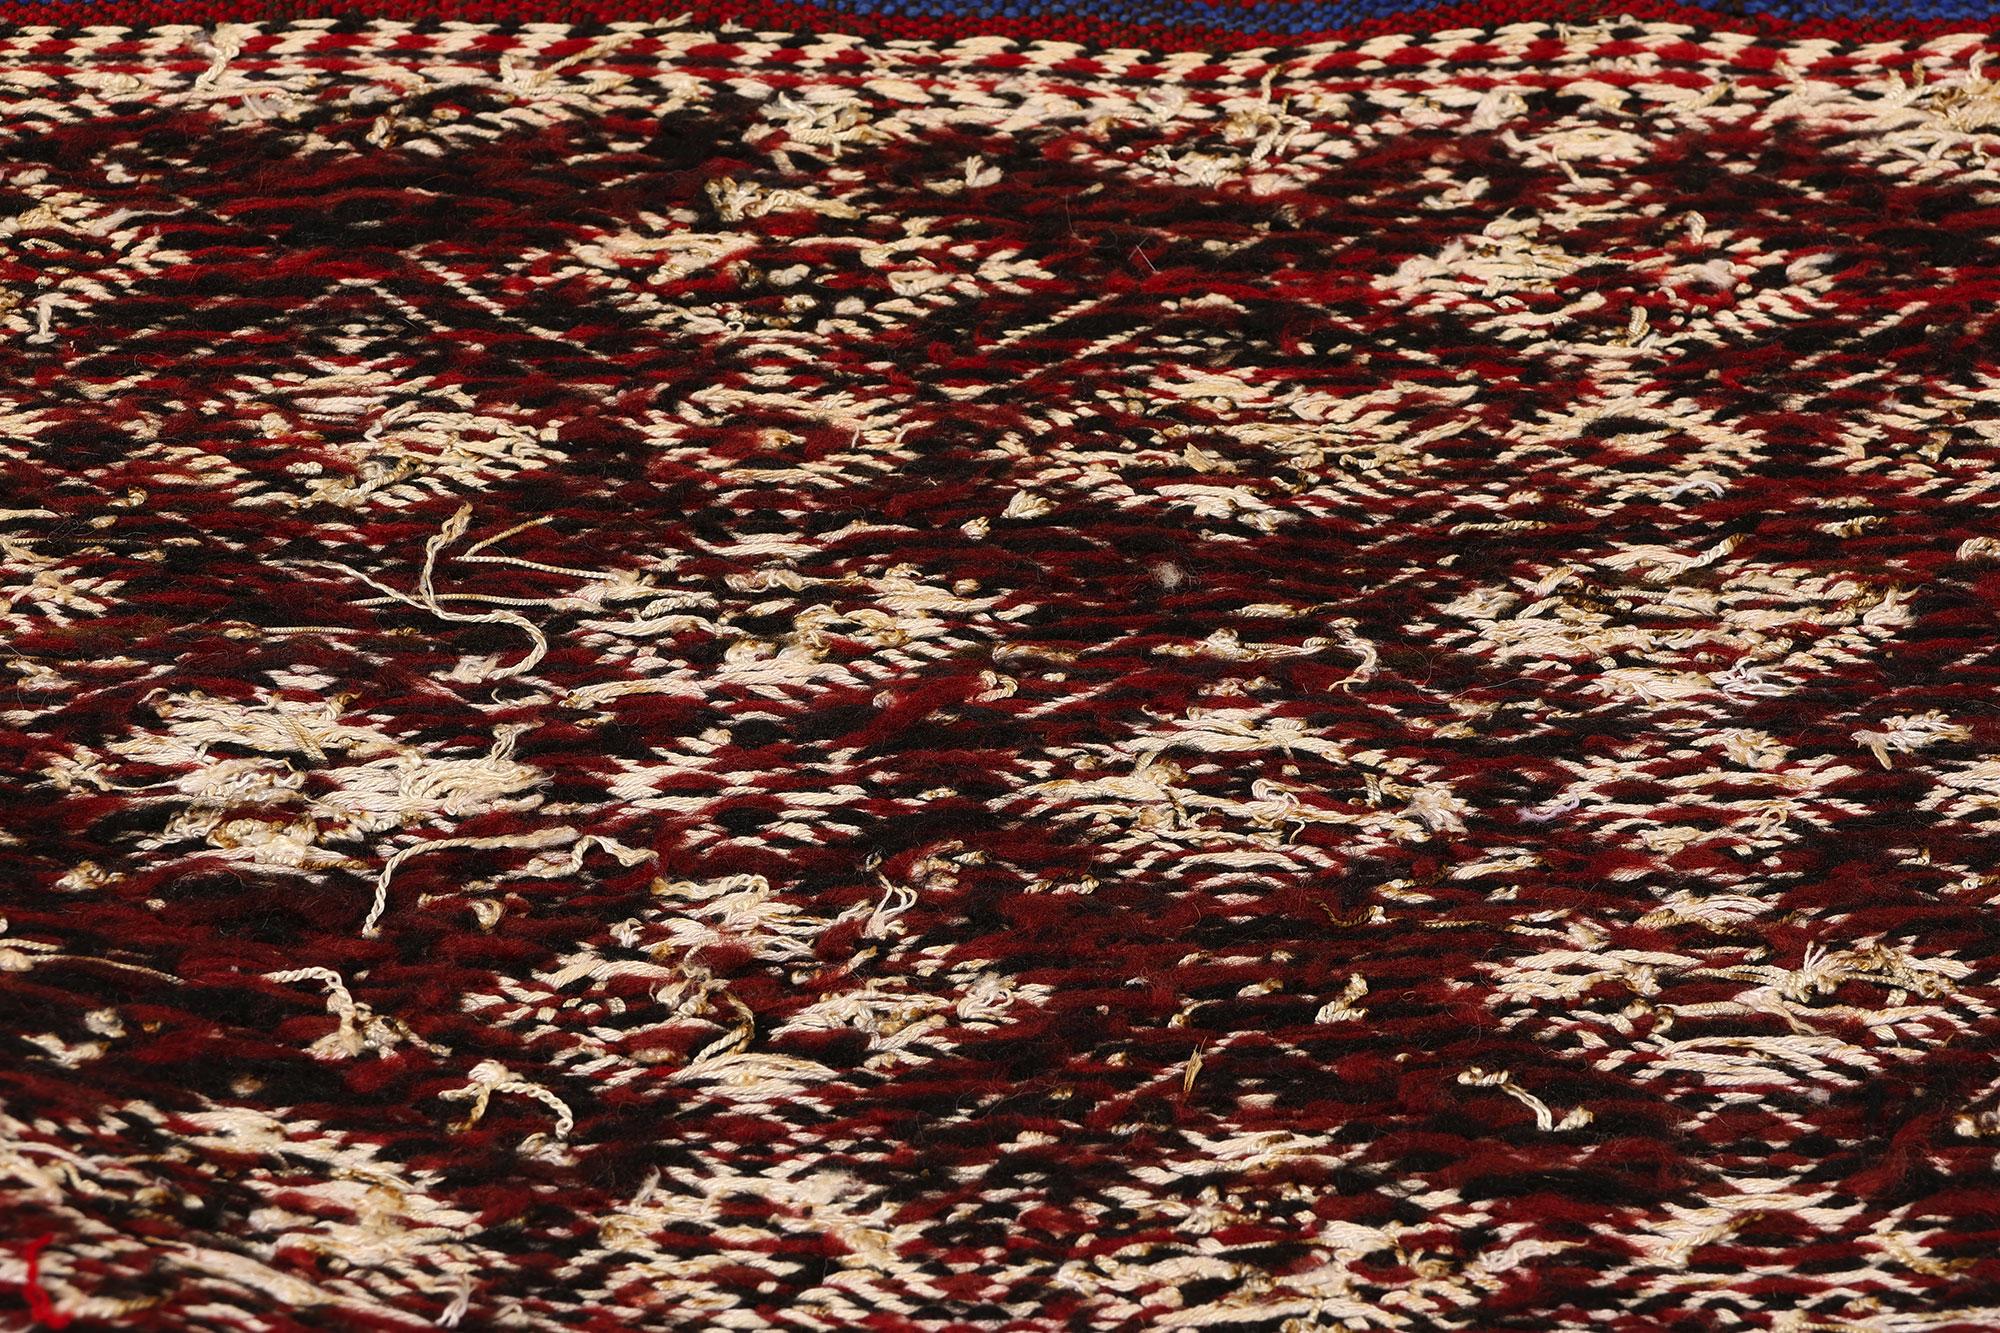 Midcentury Bohemian Vintage Moroccan Zemmour Kilim Berber Rug, 03'04 x 17'06 For Sale 1